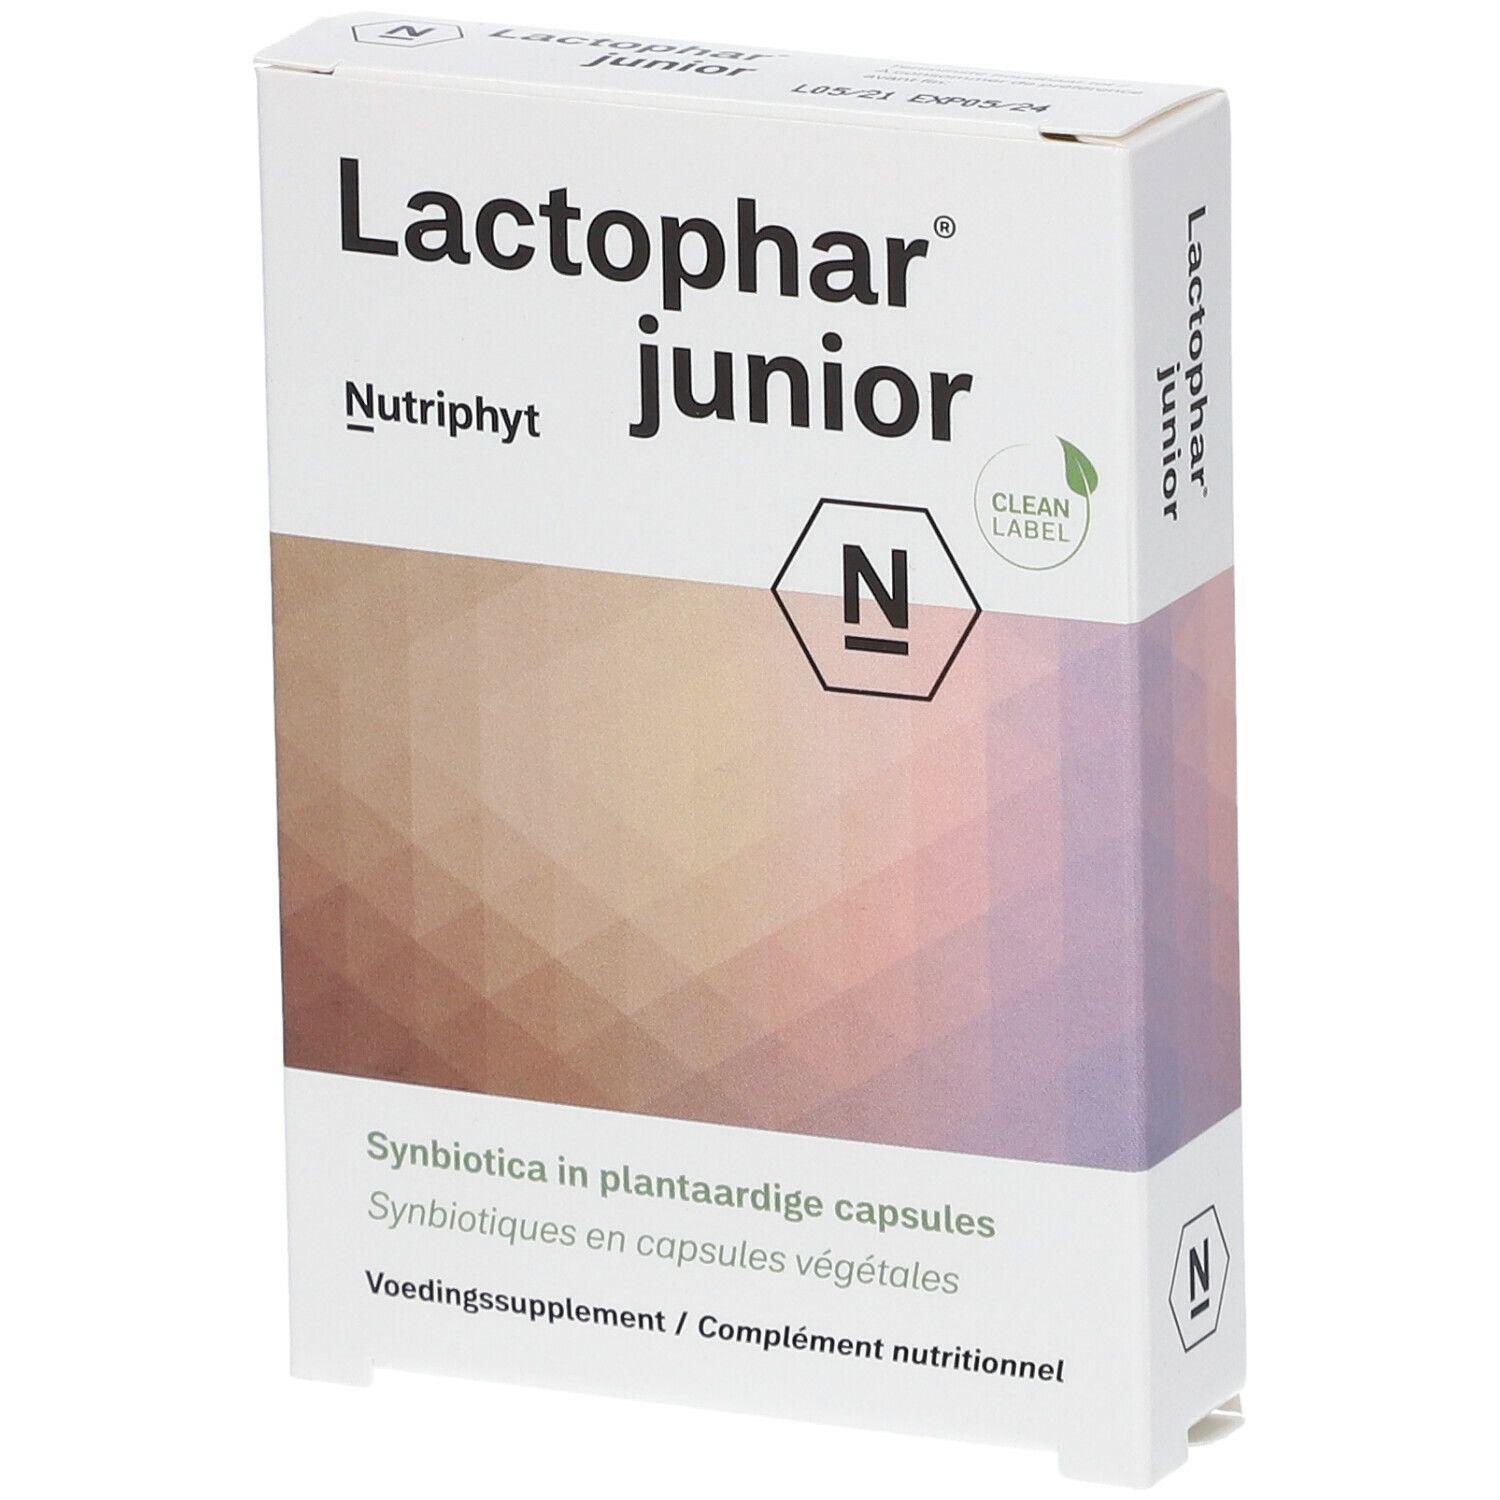 Nutriphyt Lactophar® junior